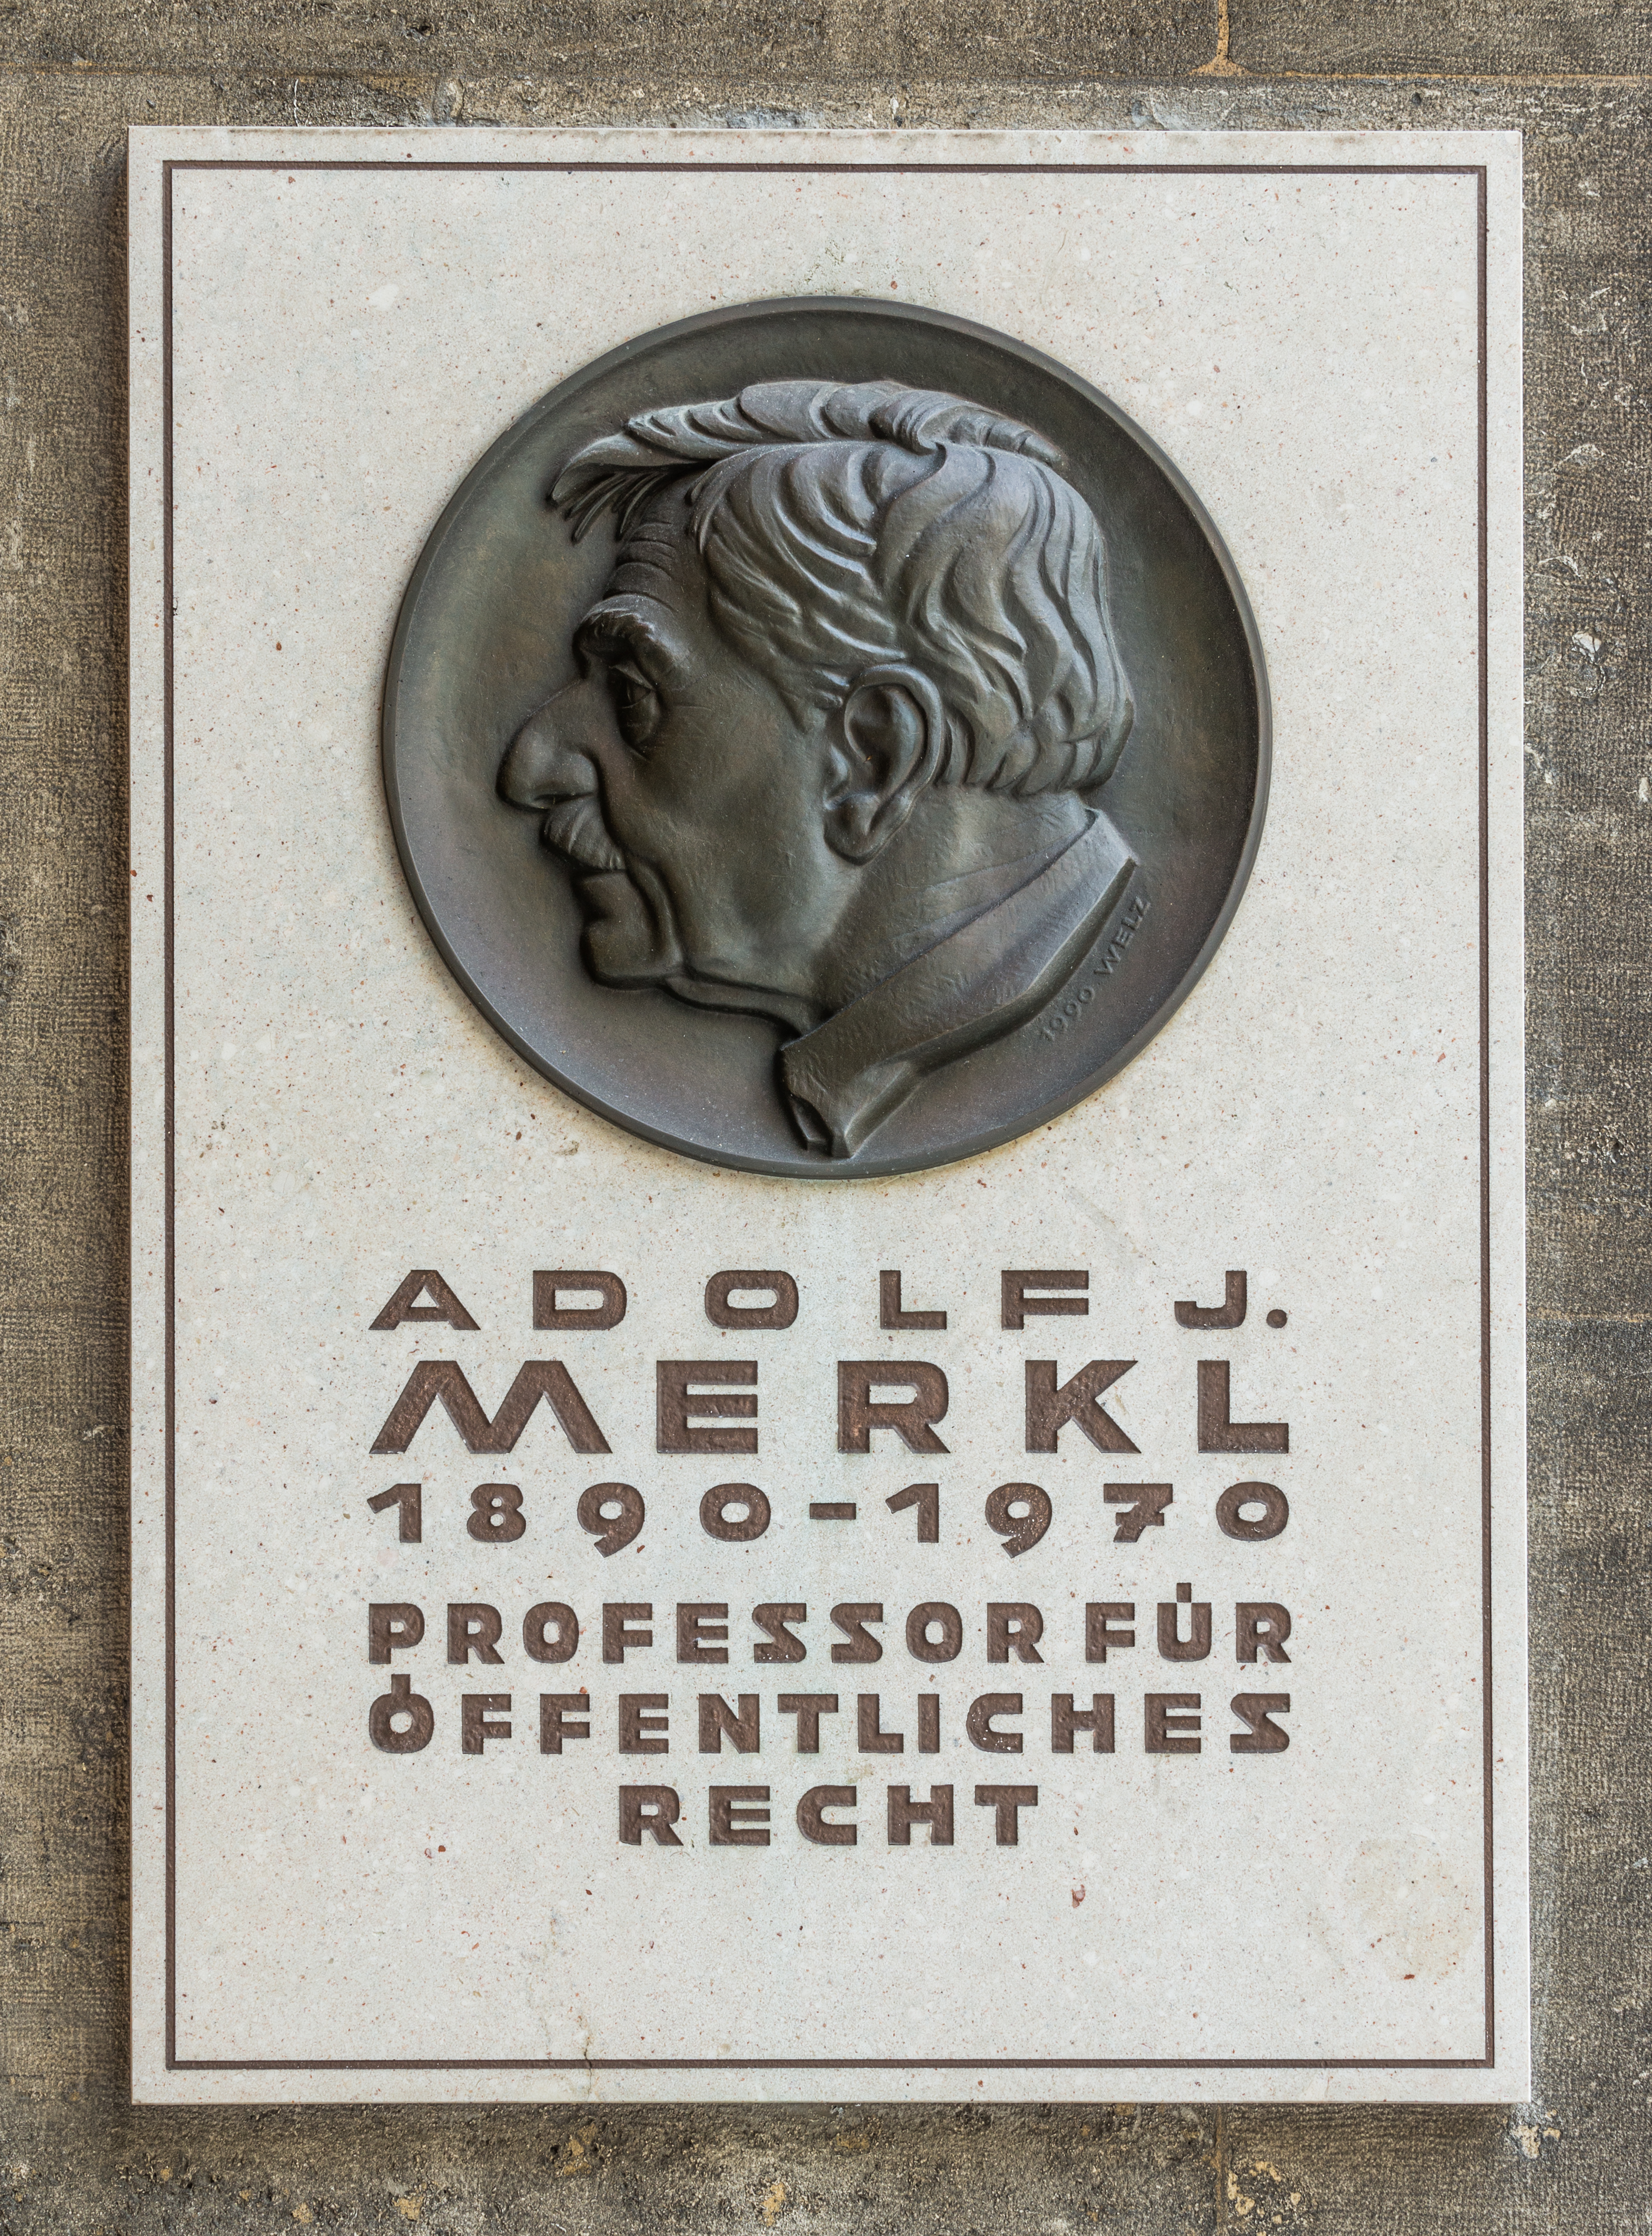 23 Adolf J. Merkl (Nr. 23) Basrelief in the Arkadenhof, University of Vienna 1333